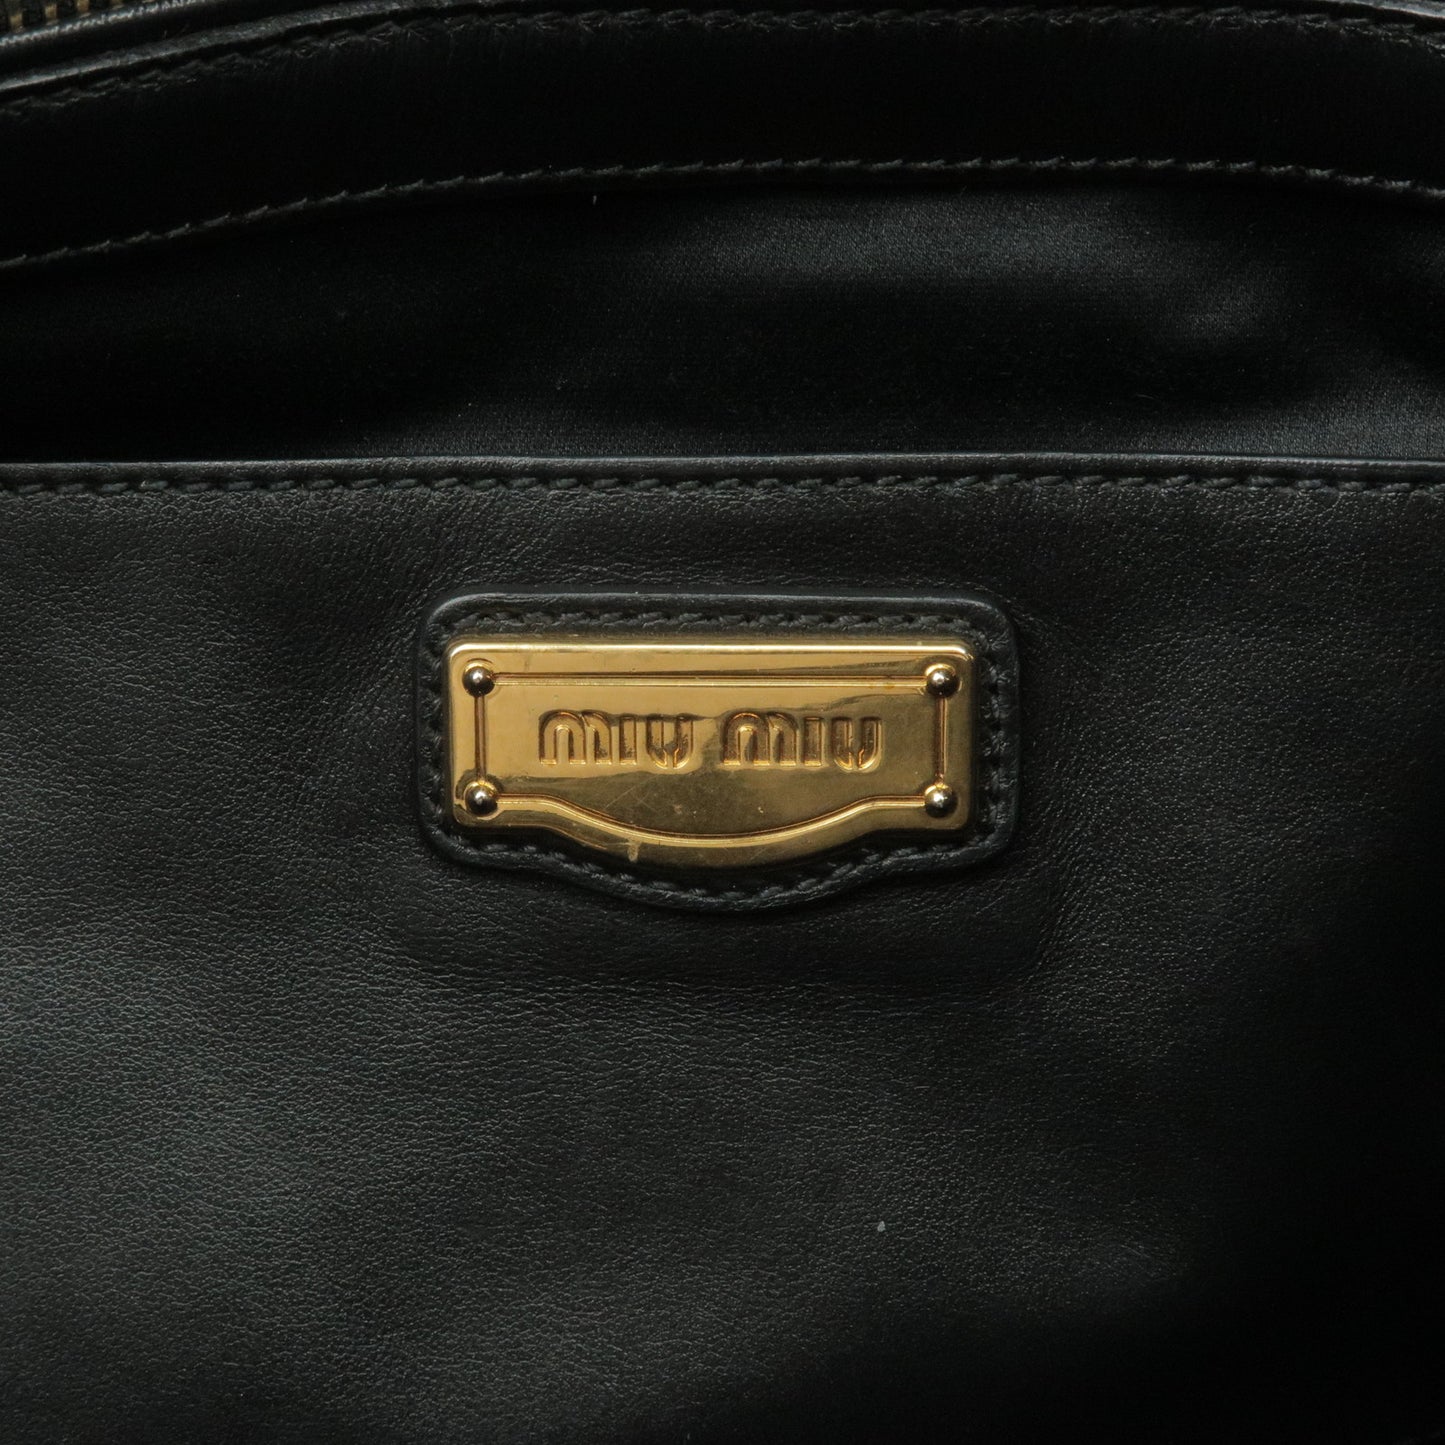 MIU MIU Leather Studs Tote Bag Hand Bag Black RR1906